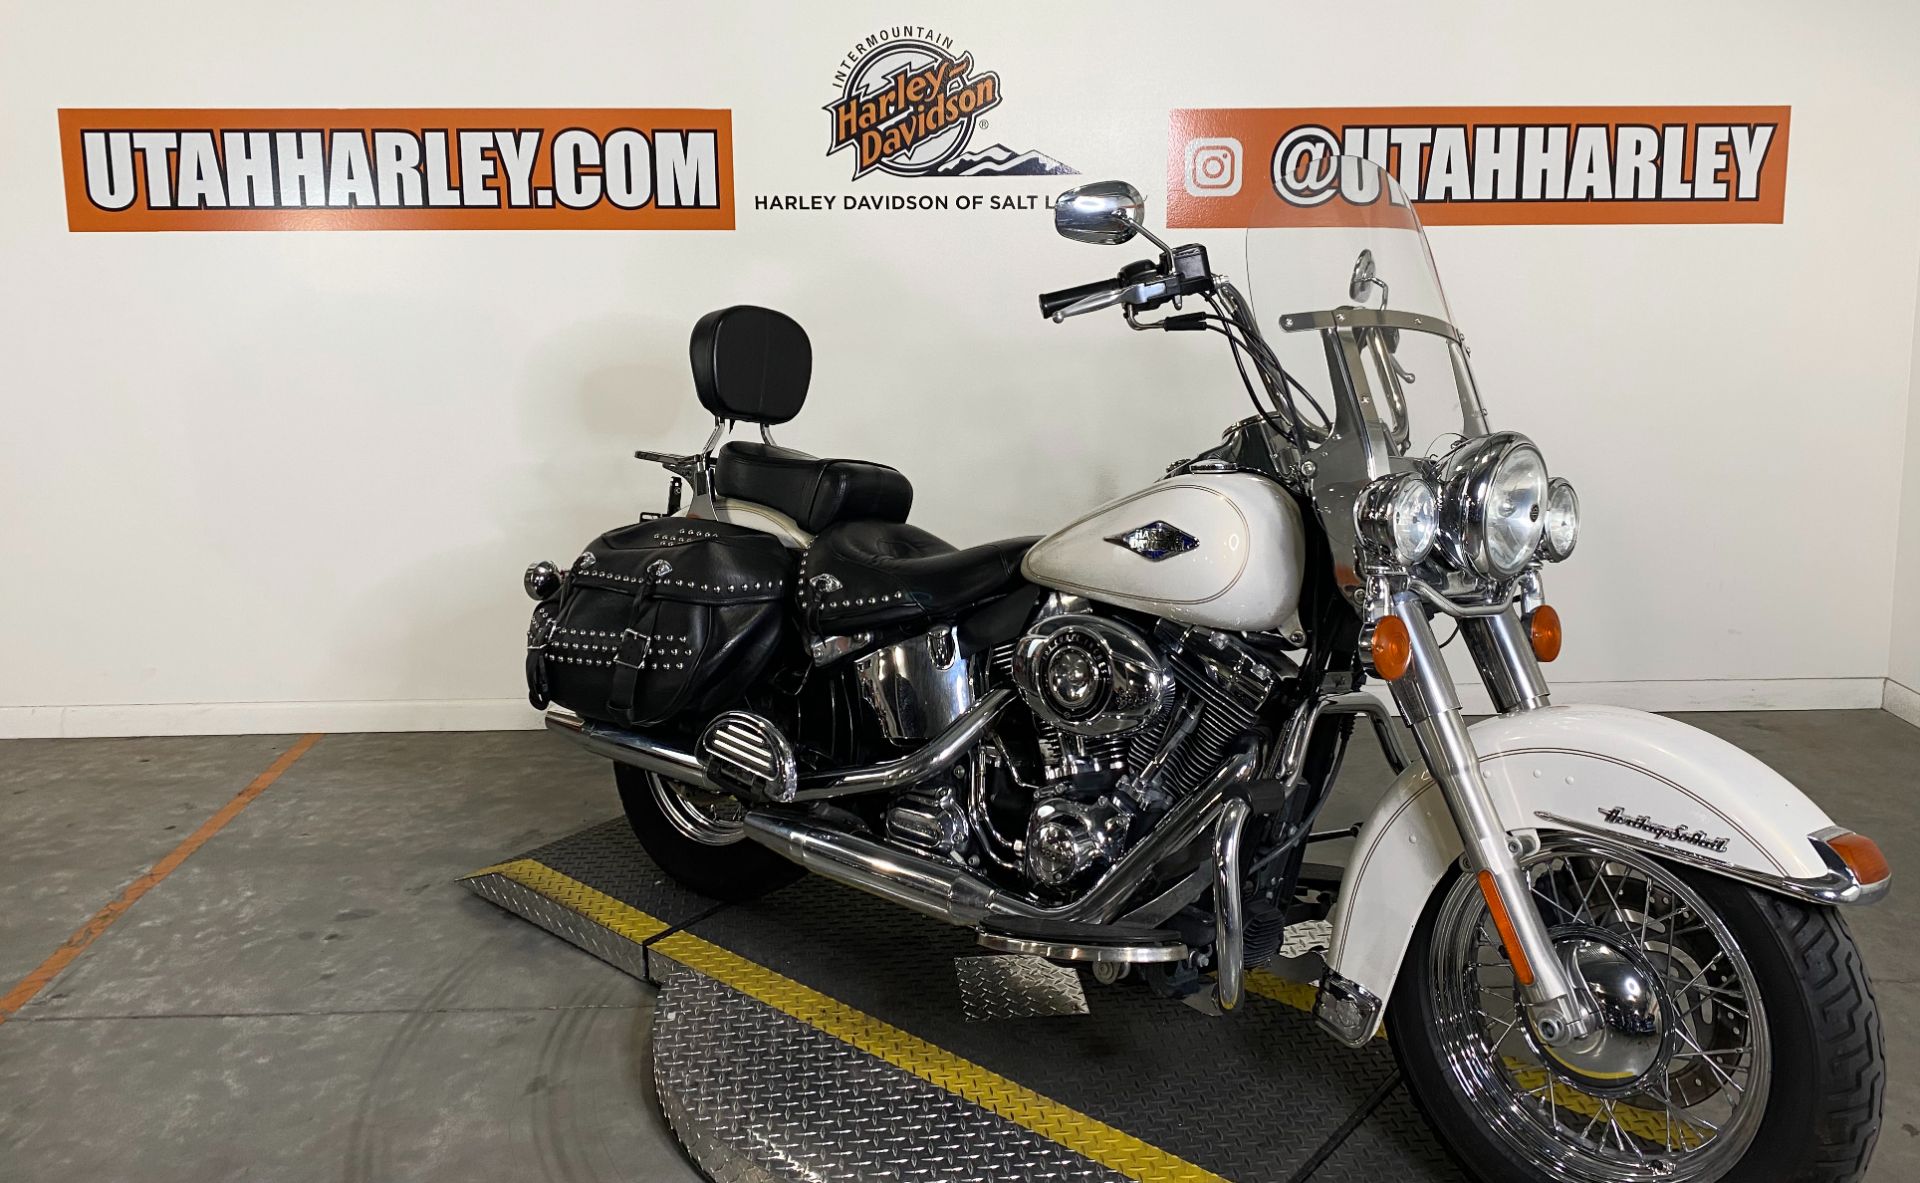 2014 Harley-Davidson Heritage Softail® Classic in Salt Lake City, Utah - Photo 2